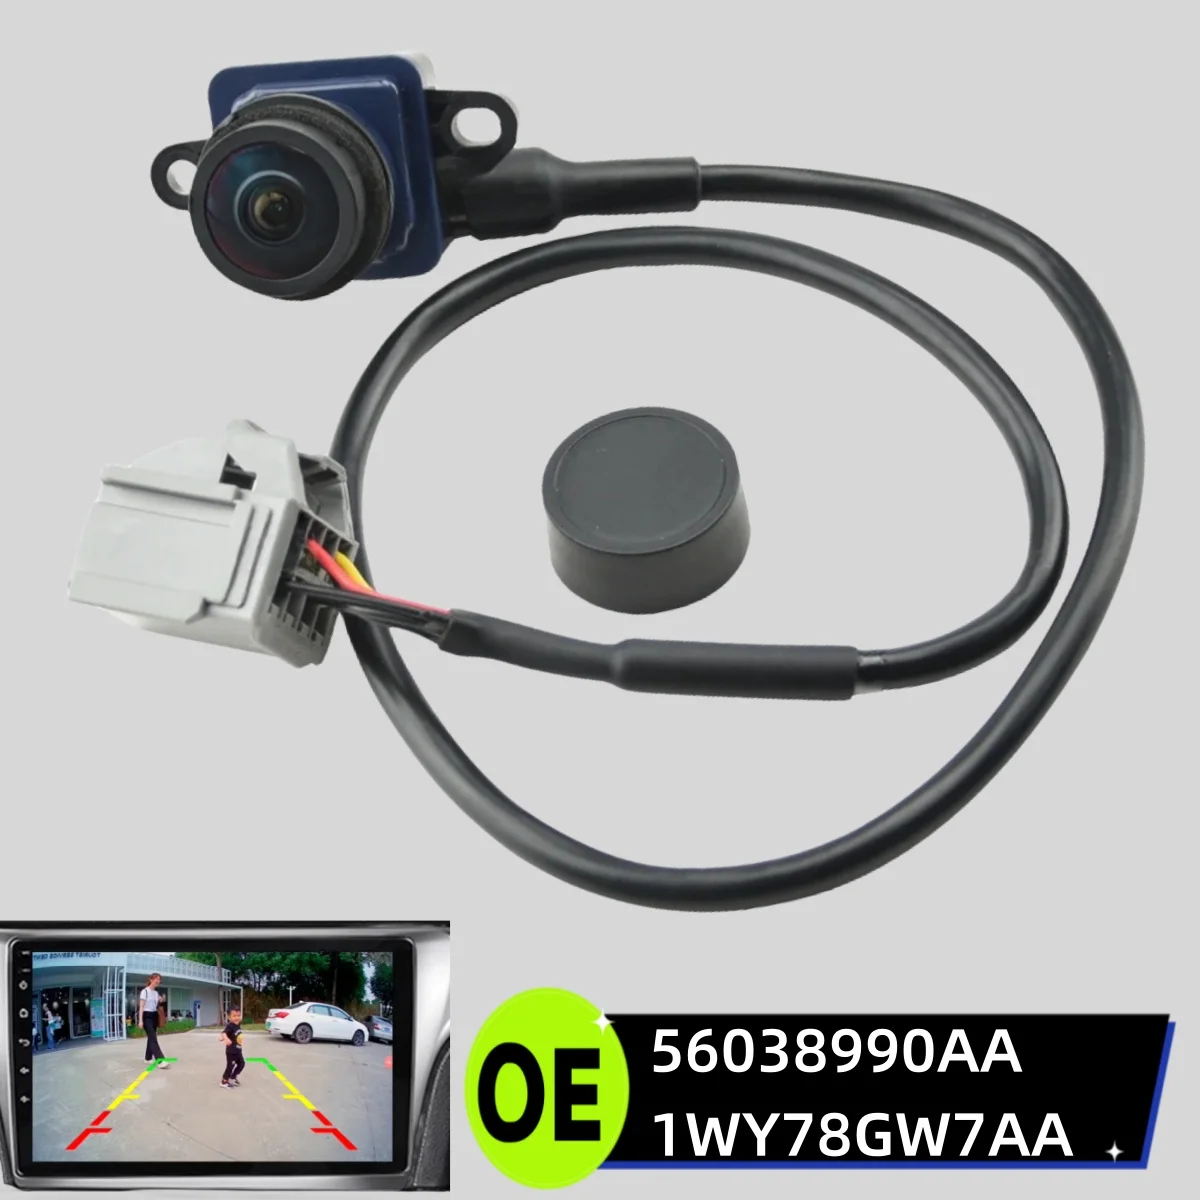 

OEM 56038990AA 1WY78GW7AA Trunk Lid New Rear View Backup Parking Reversing Vehicle HD Camera for 2013 2014 2015 2016 Dodge Dart